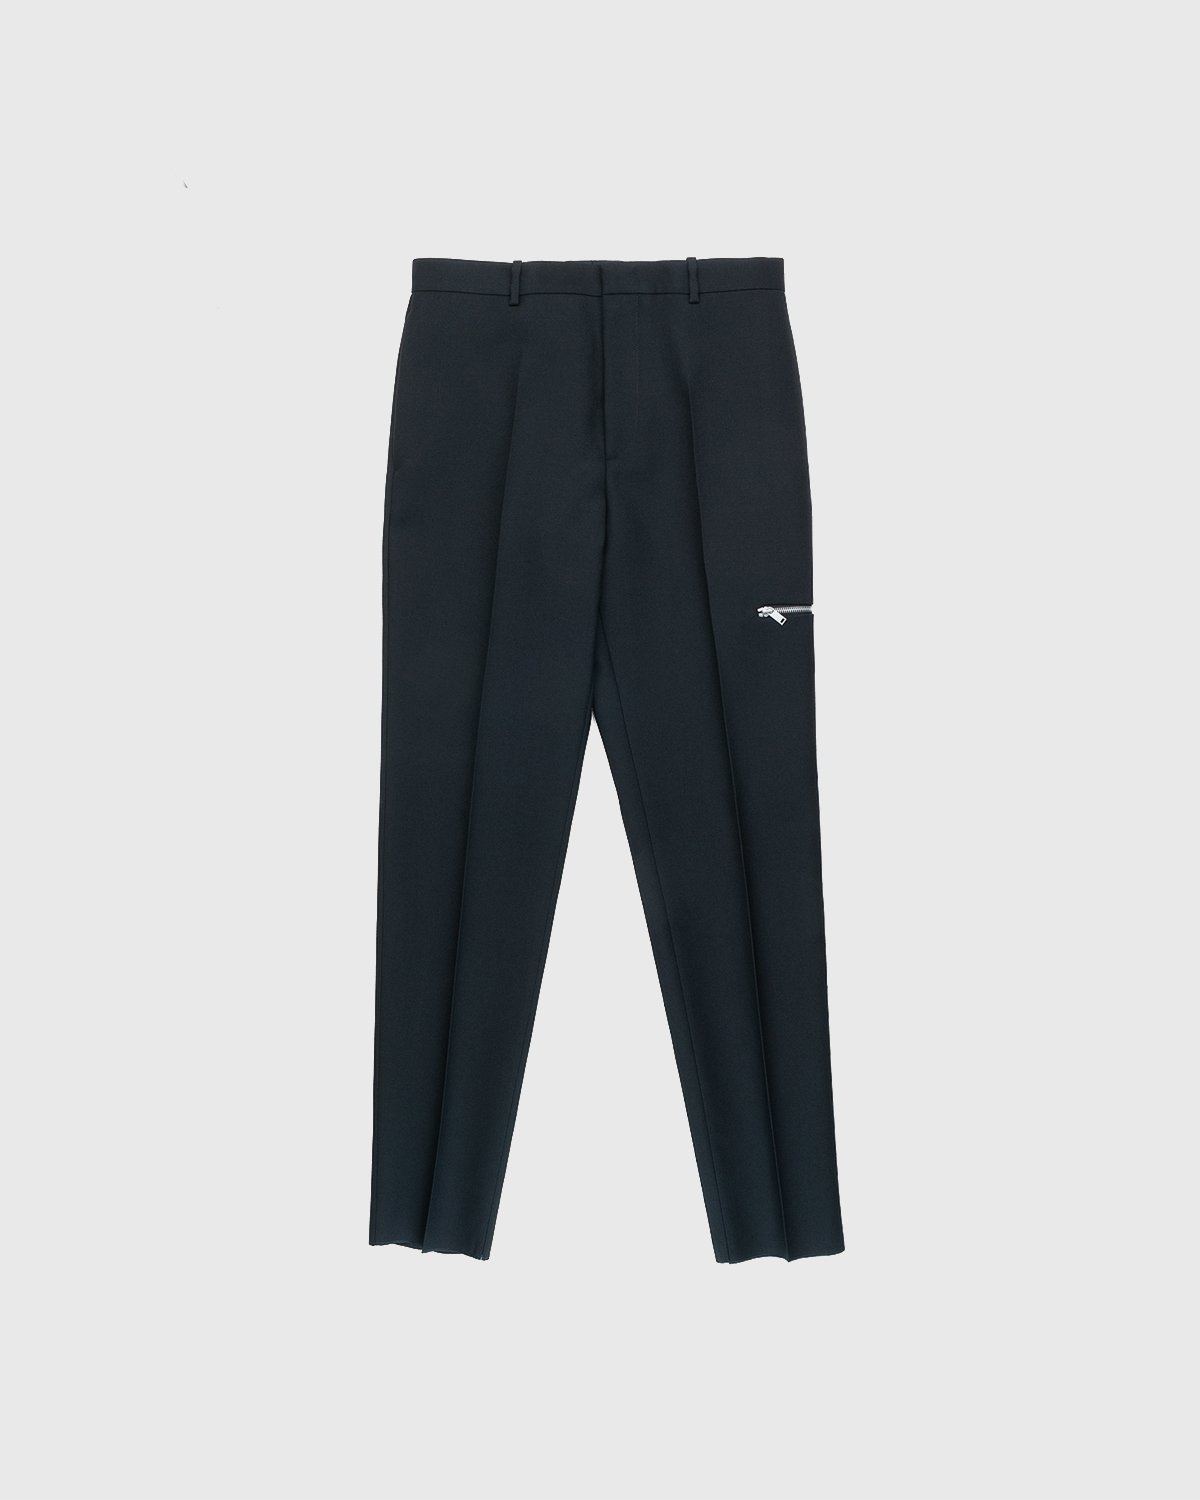 Jil Sander – Zip Pocket Trousers Black